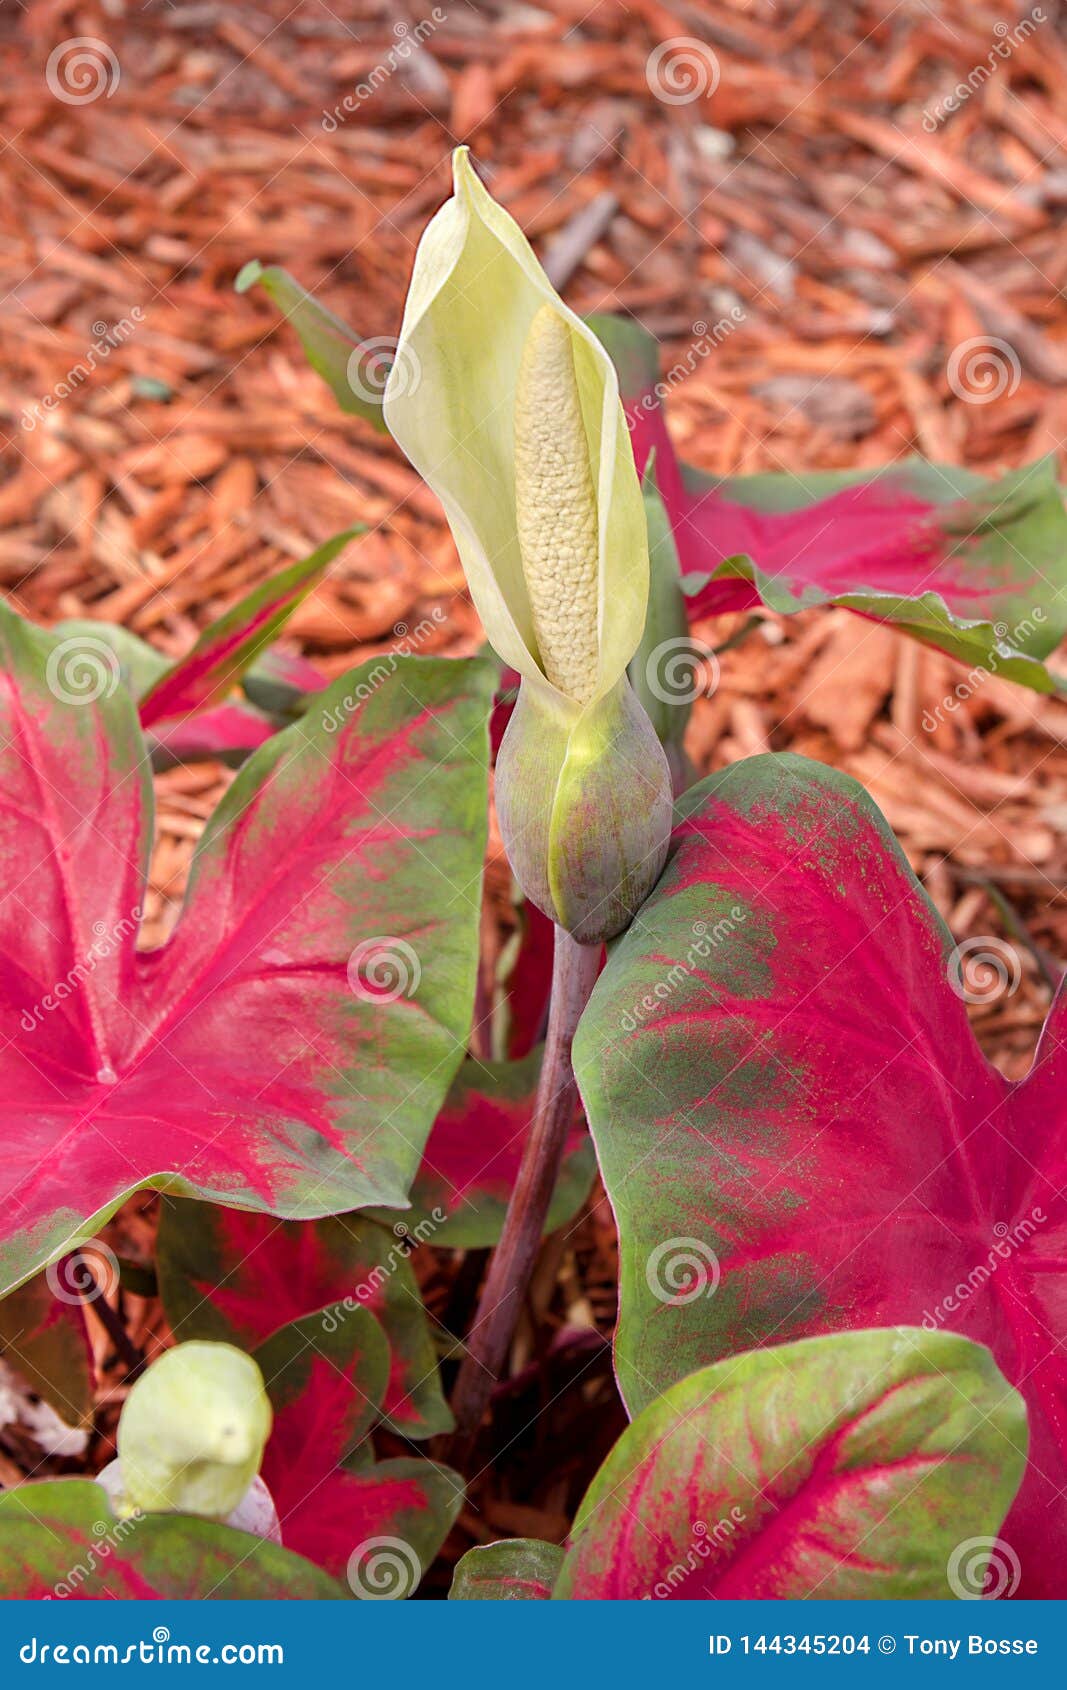 Caladium Flower In Bloom Stock Photo Image Of Life 144345204